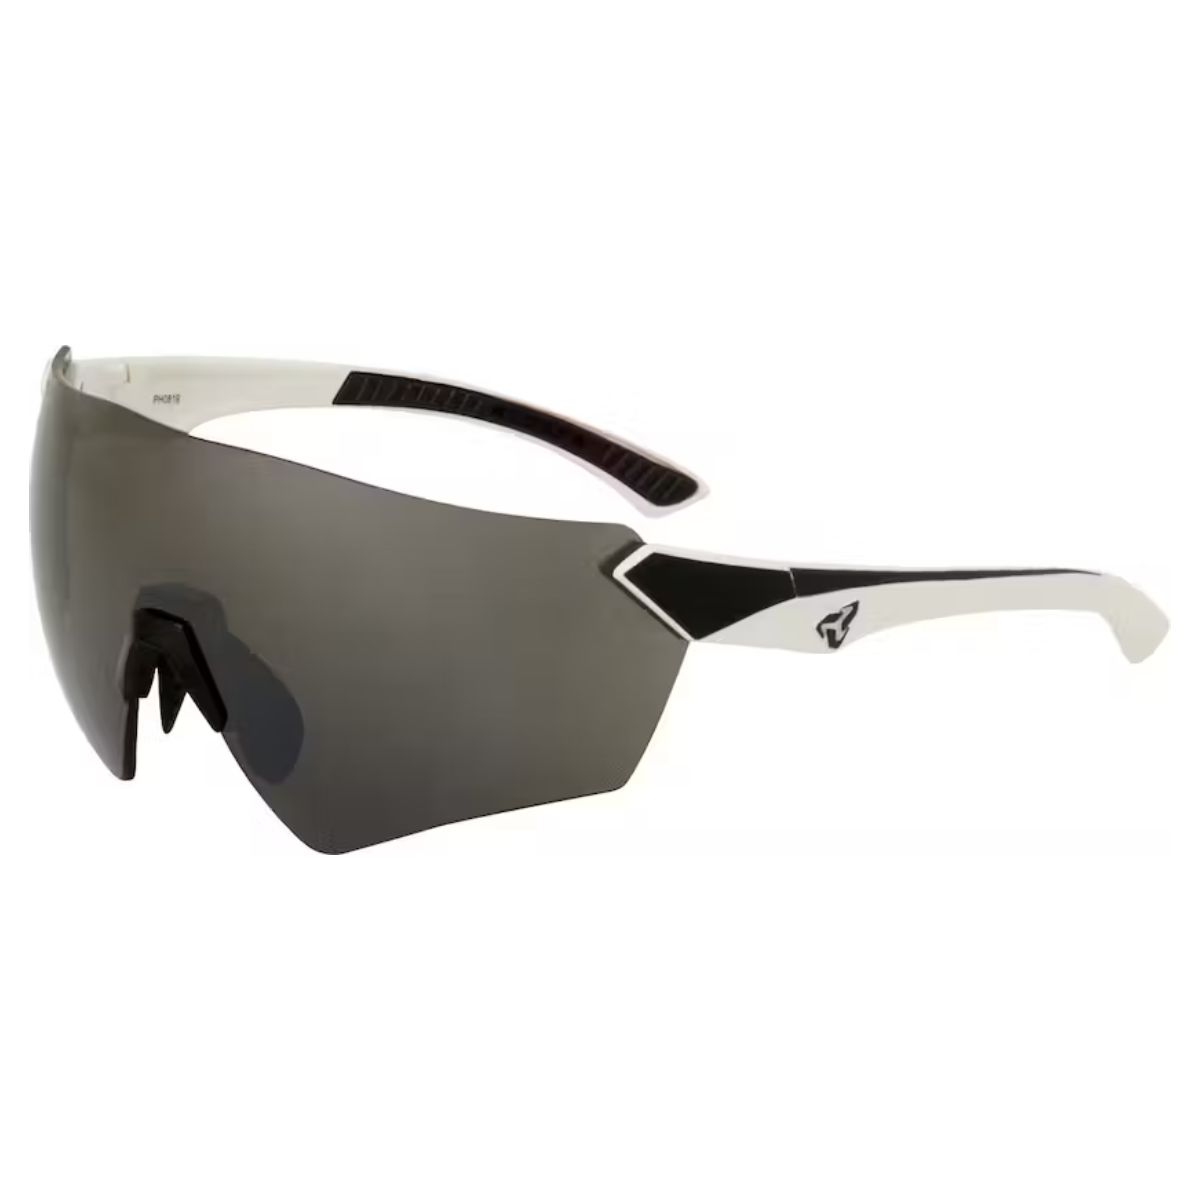 Ryders Main Sunglasses Poly White Black - Grey Antifog Lens